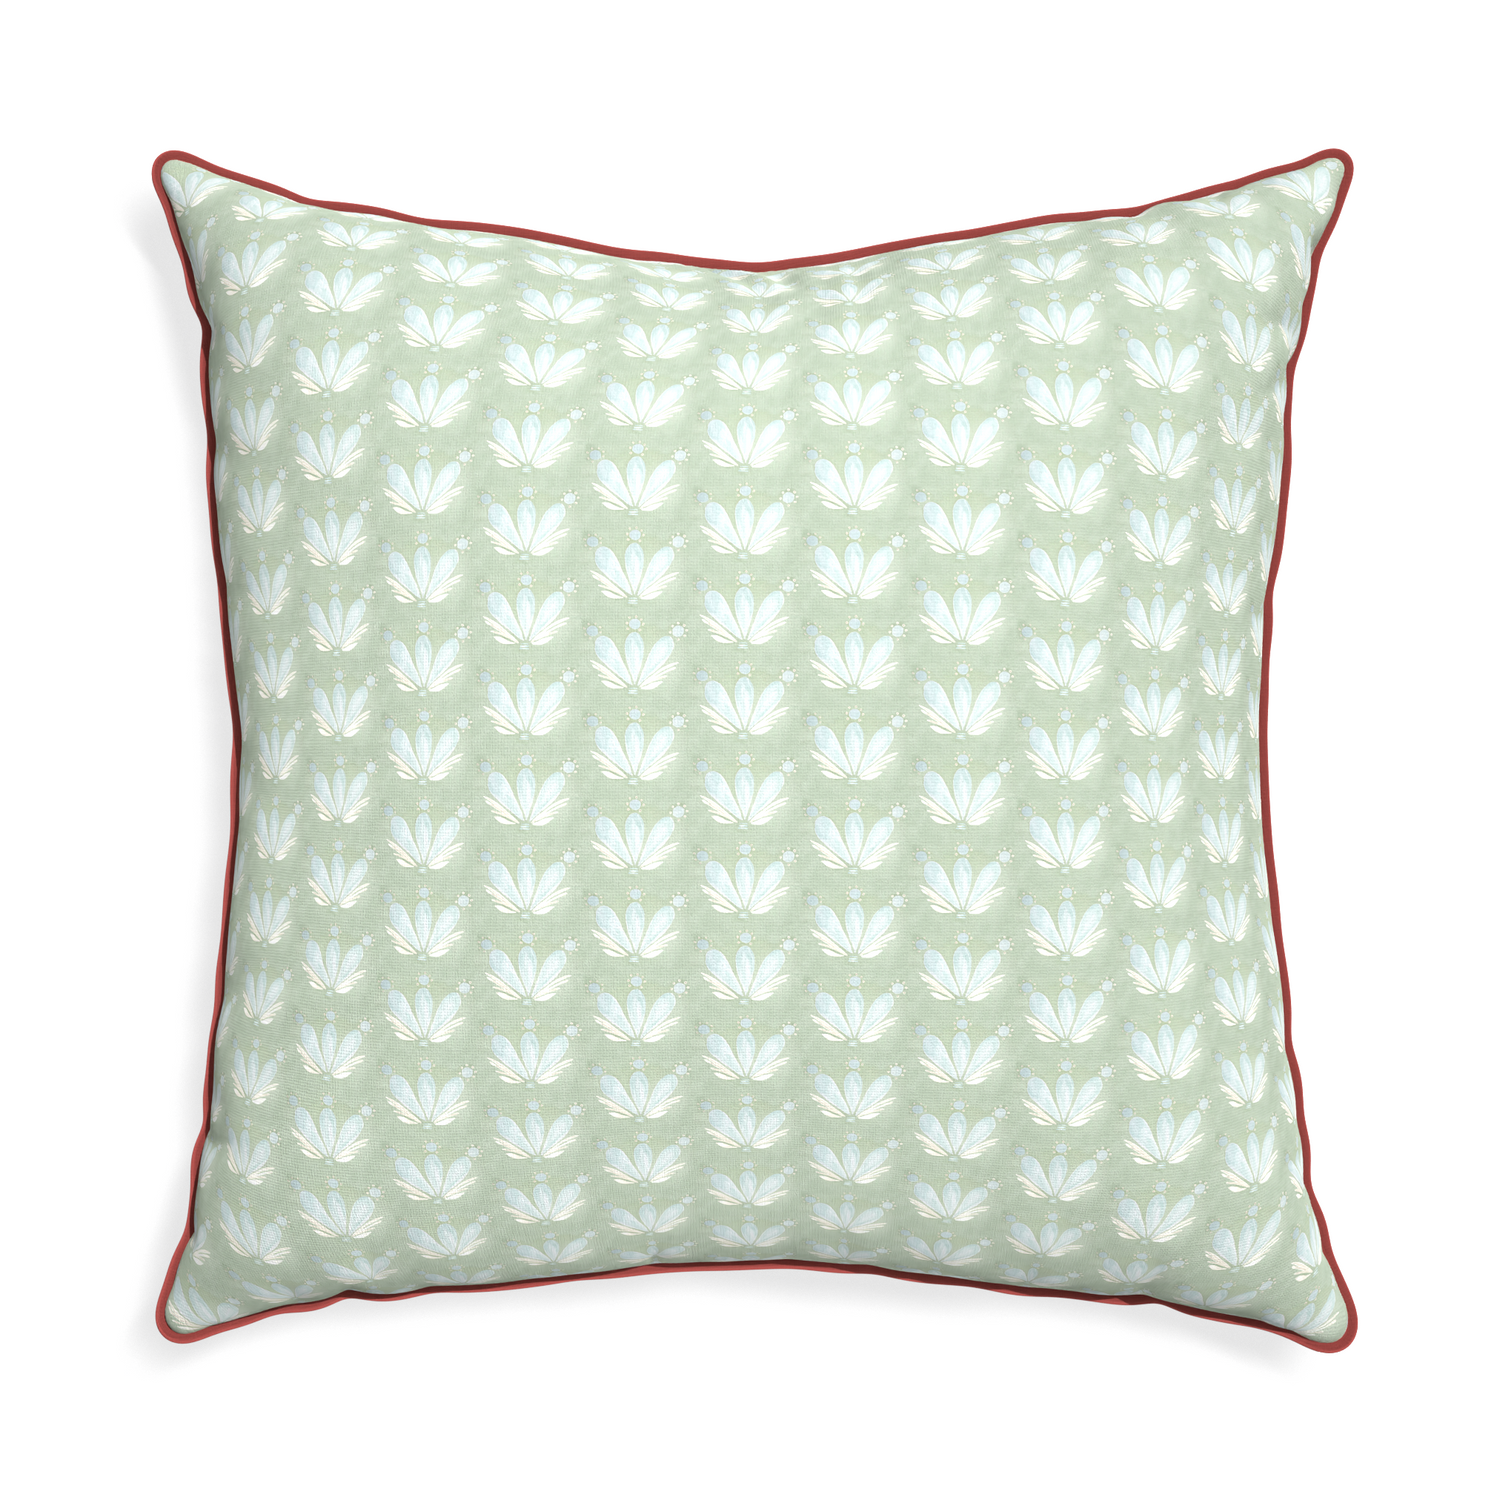 Euro-sham serena sea salt custom pillow with c piping on white background